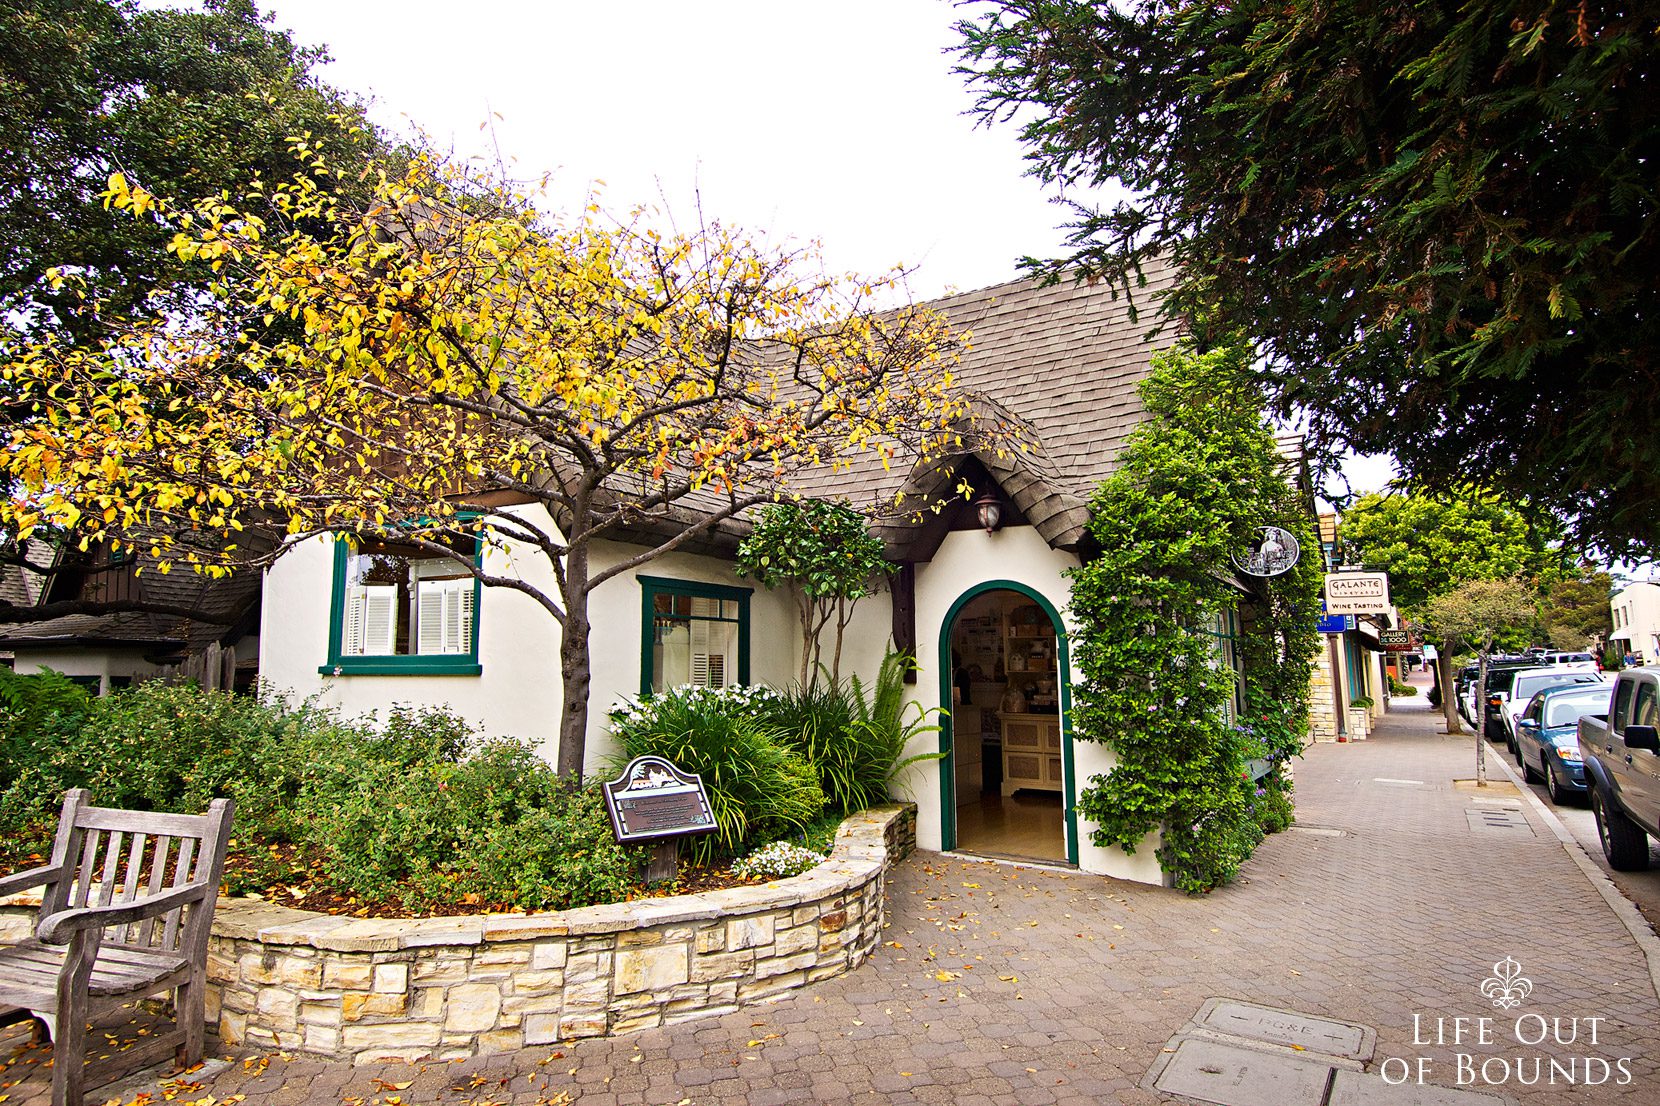 The-Soiled-Doves-Bath-House-shop-in-Carmel-by-the-Sea-California